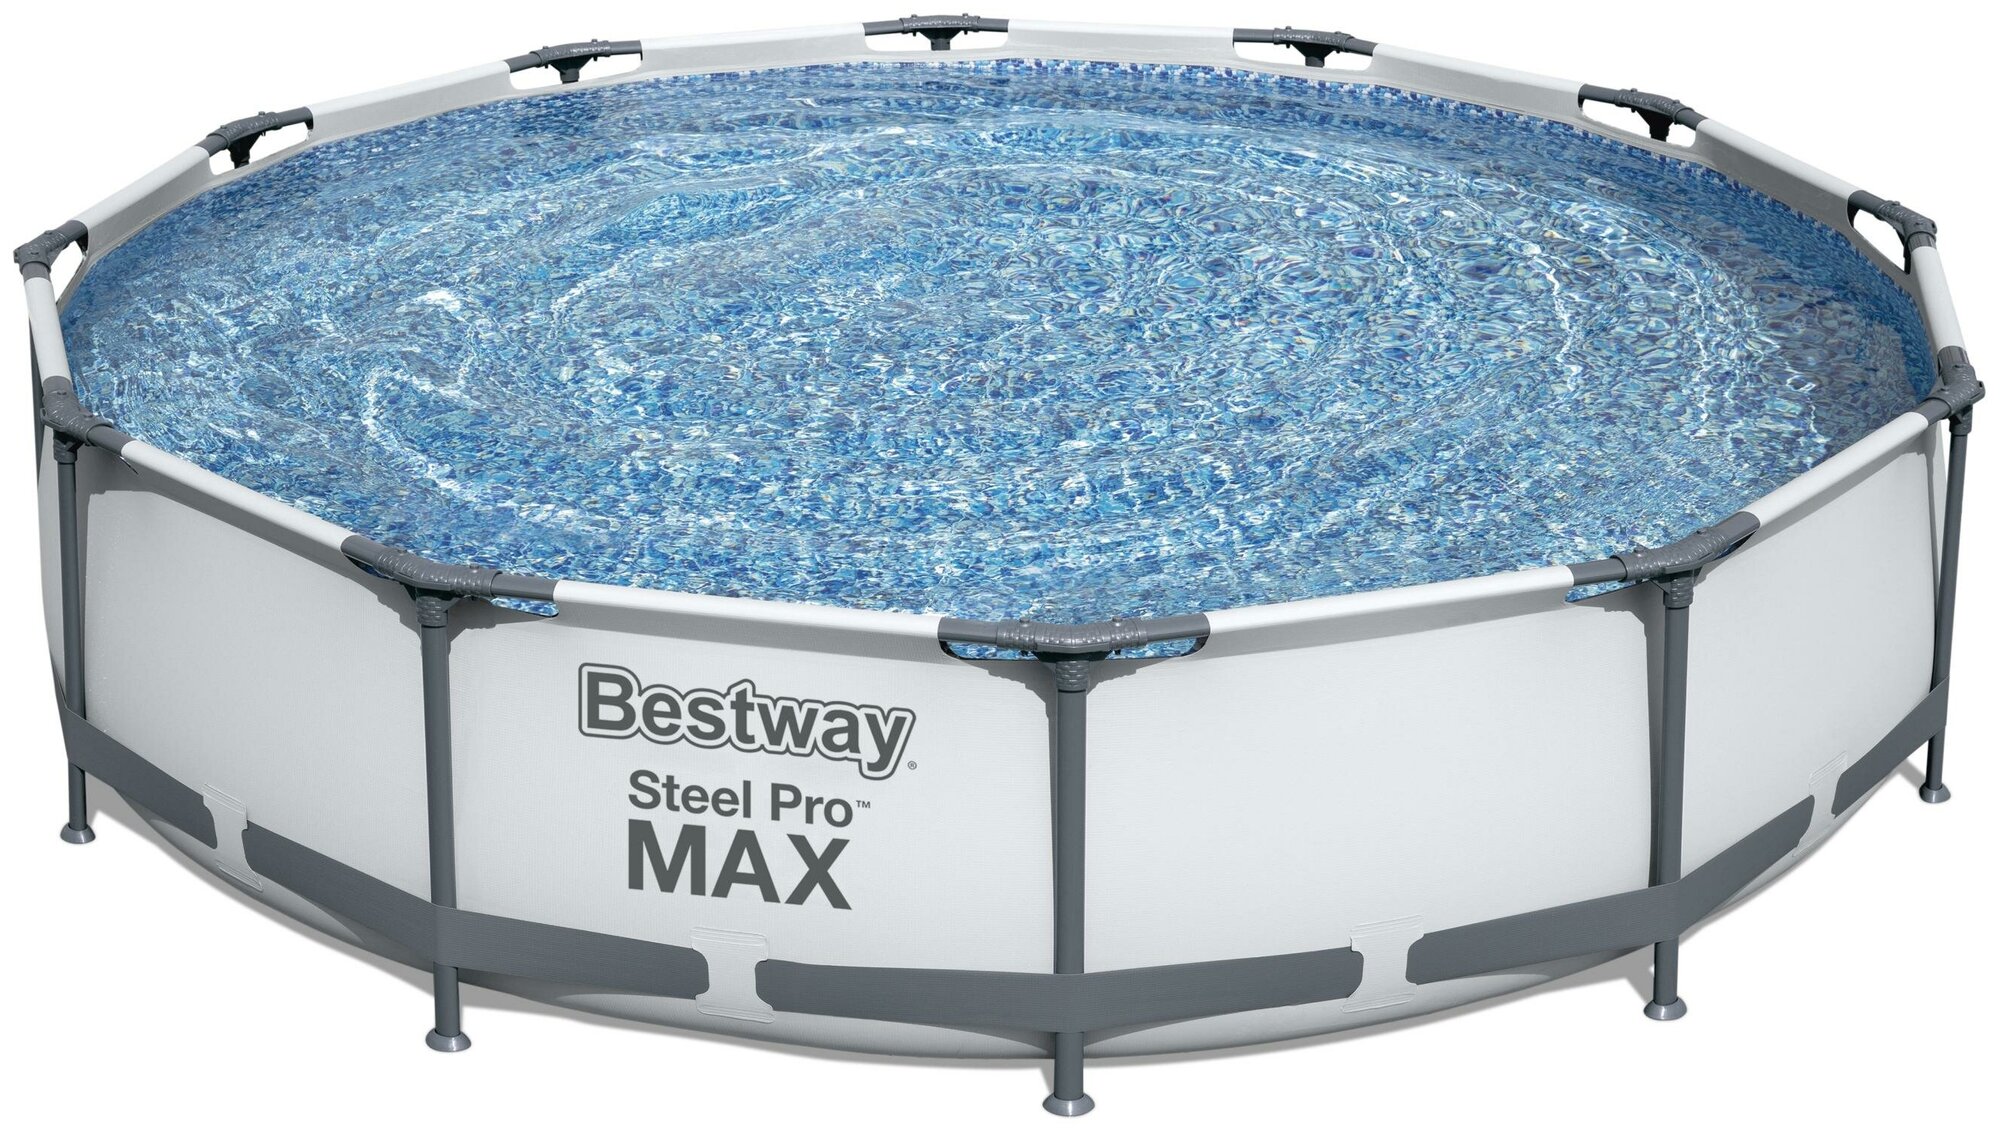 Бассейн Bestway Бассейн каркасный Steel Pro MAX 366 х 76 см фильтр-насос 56416 Bestway